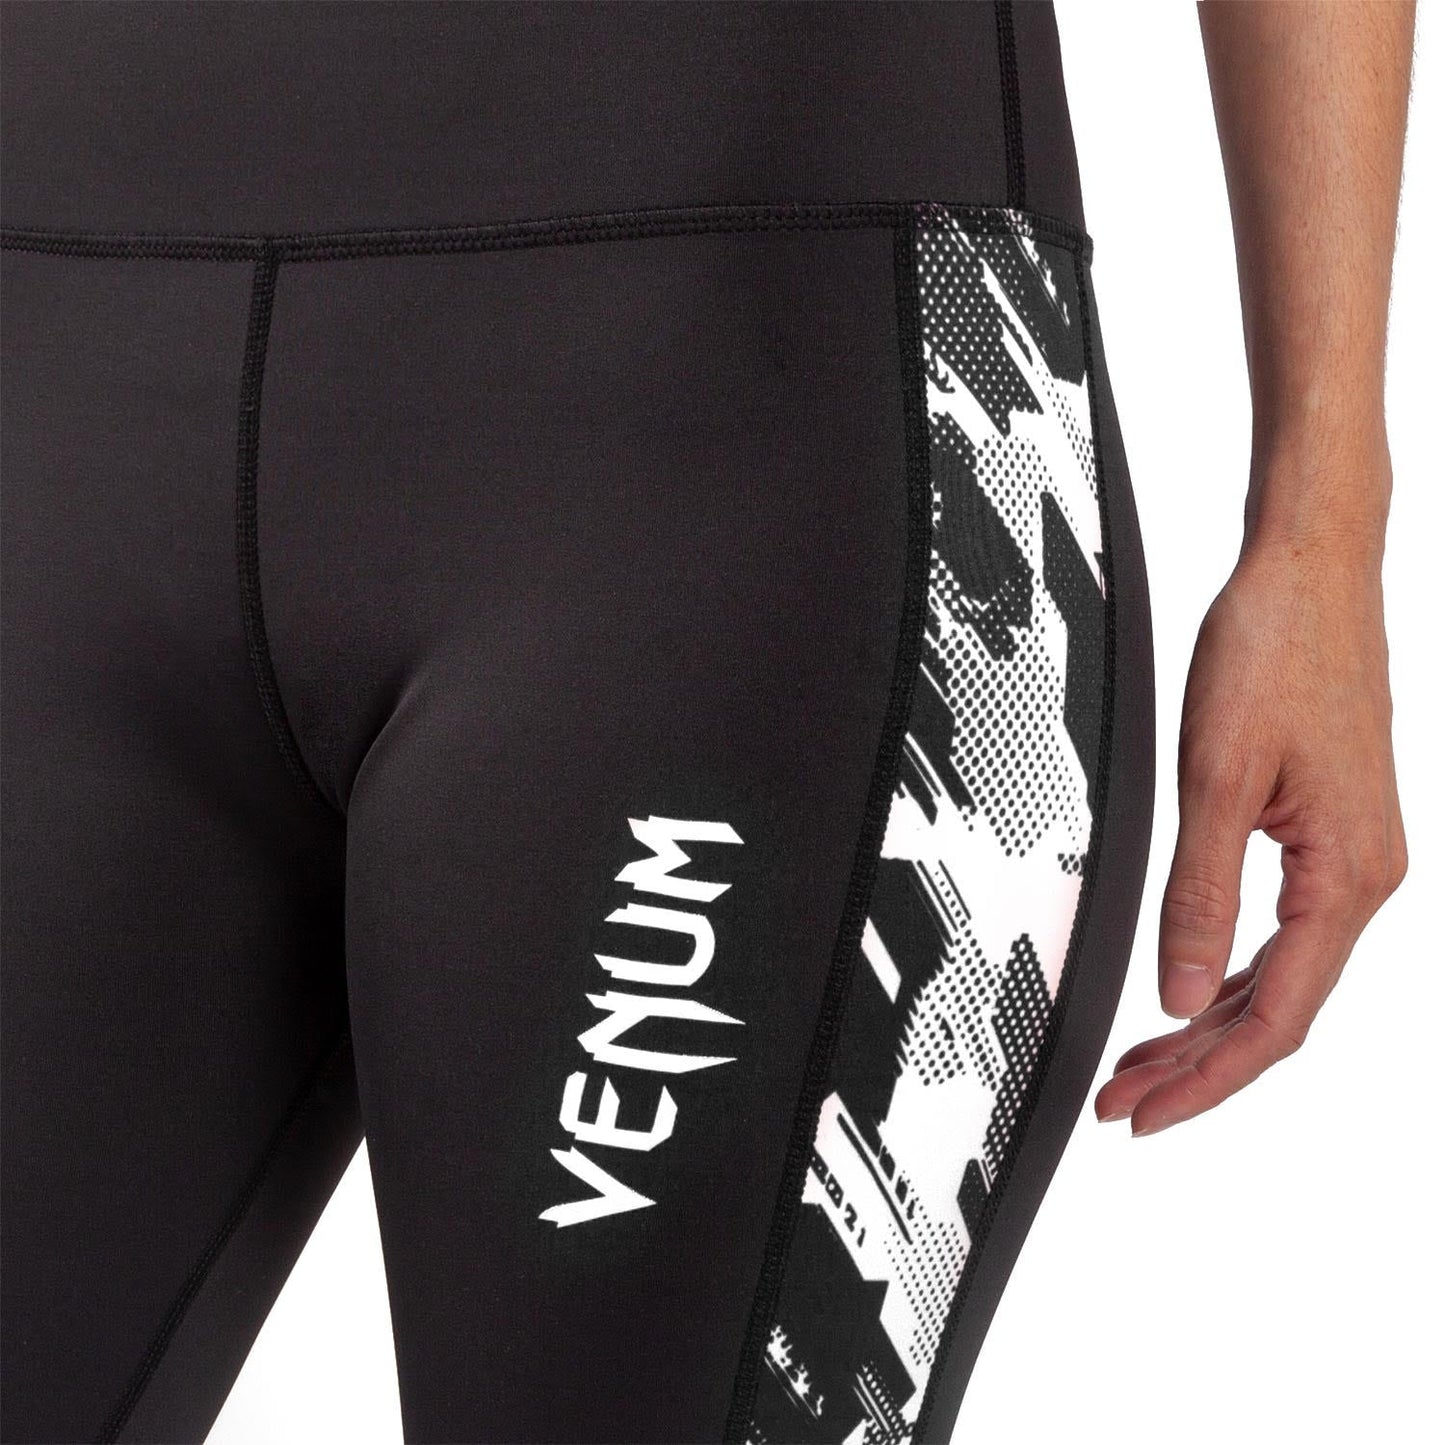 Venum Tecmo Leggings - For Women - Black/White